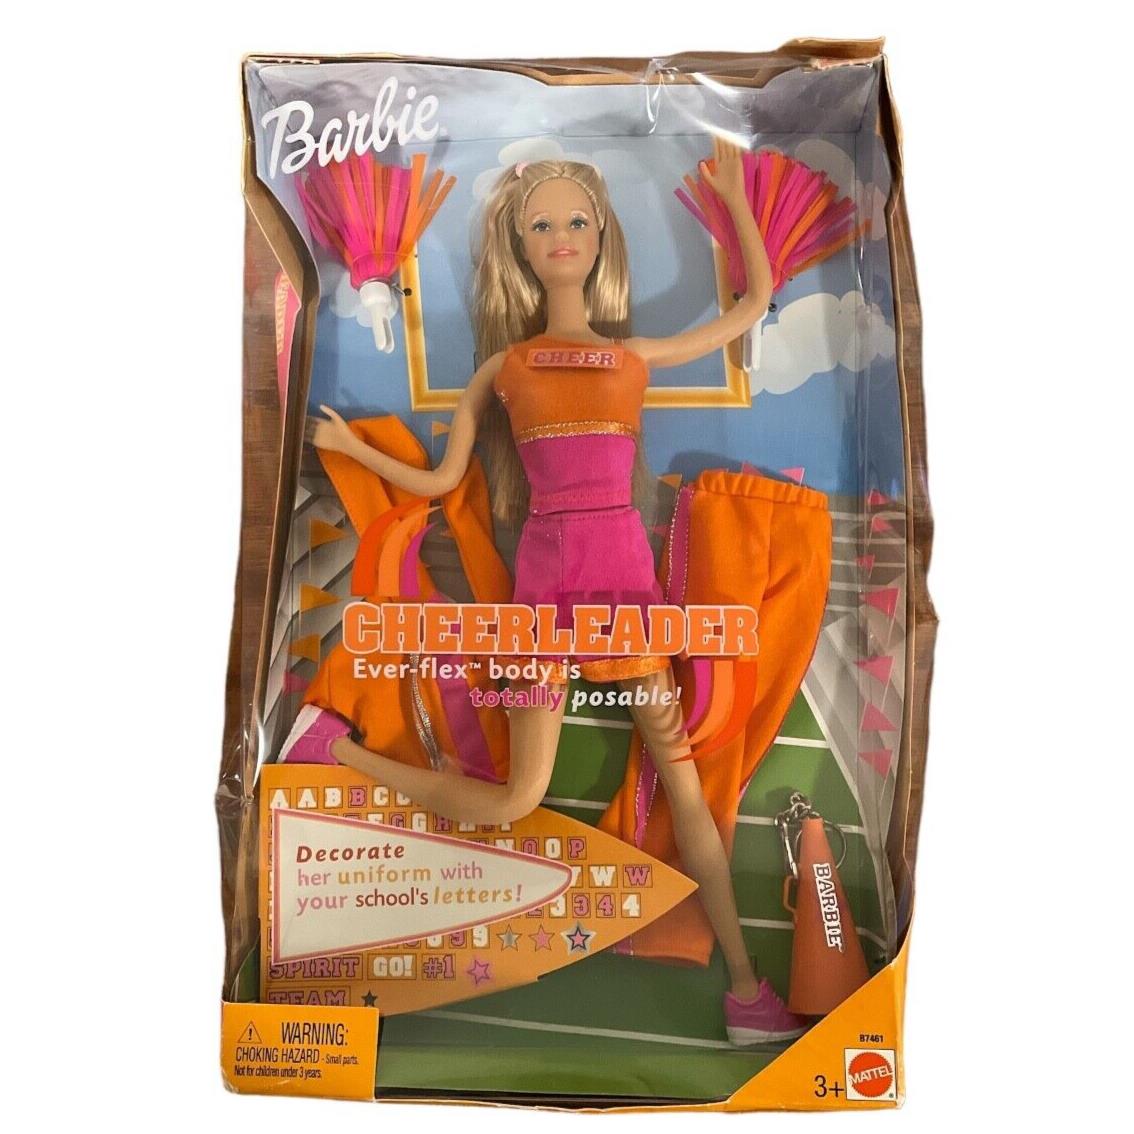 2003 Barbie Cheerleader Doll Ever-flex Body Posable 87461 Mattel Box Damage